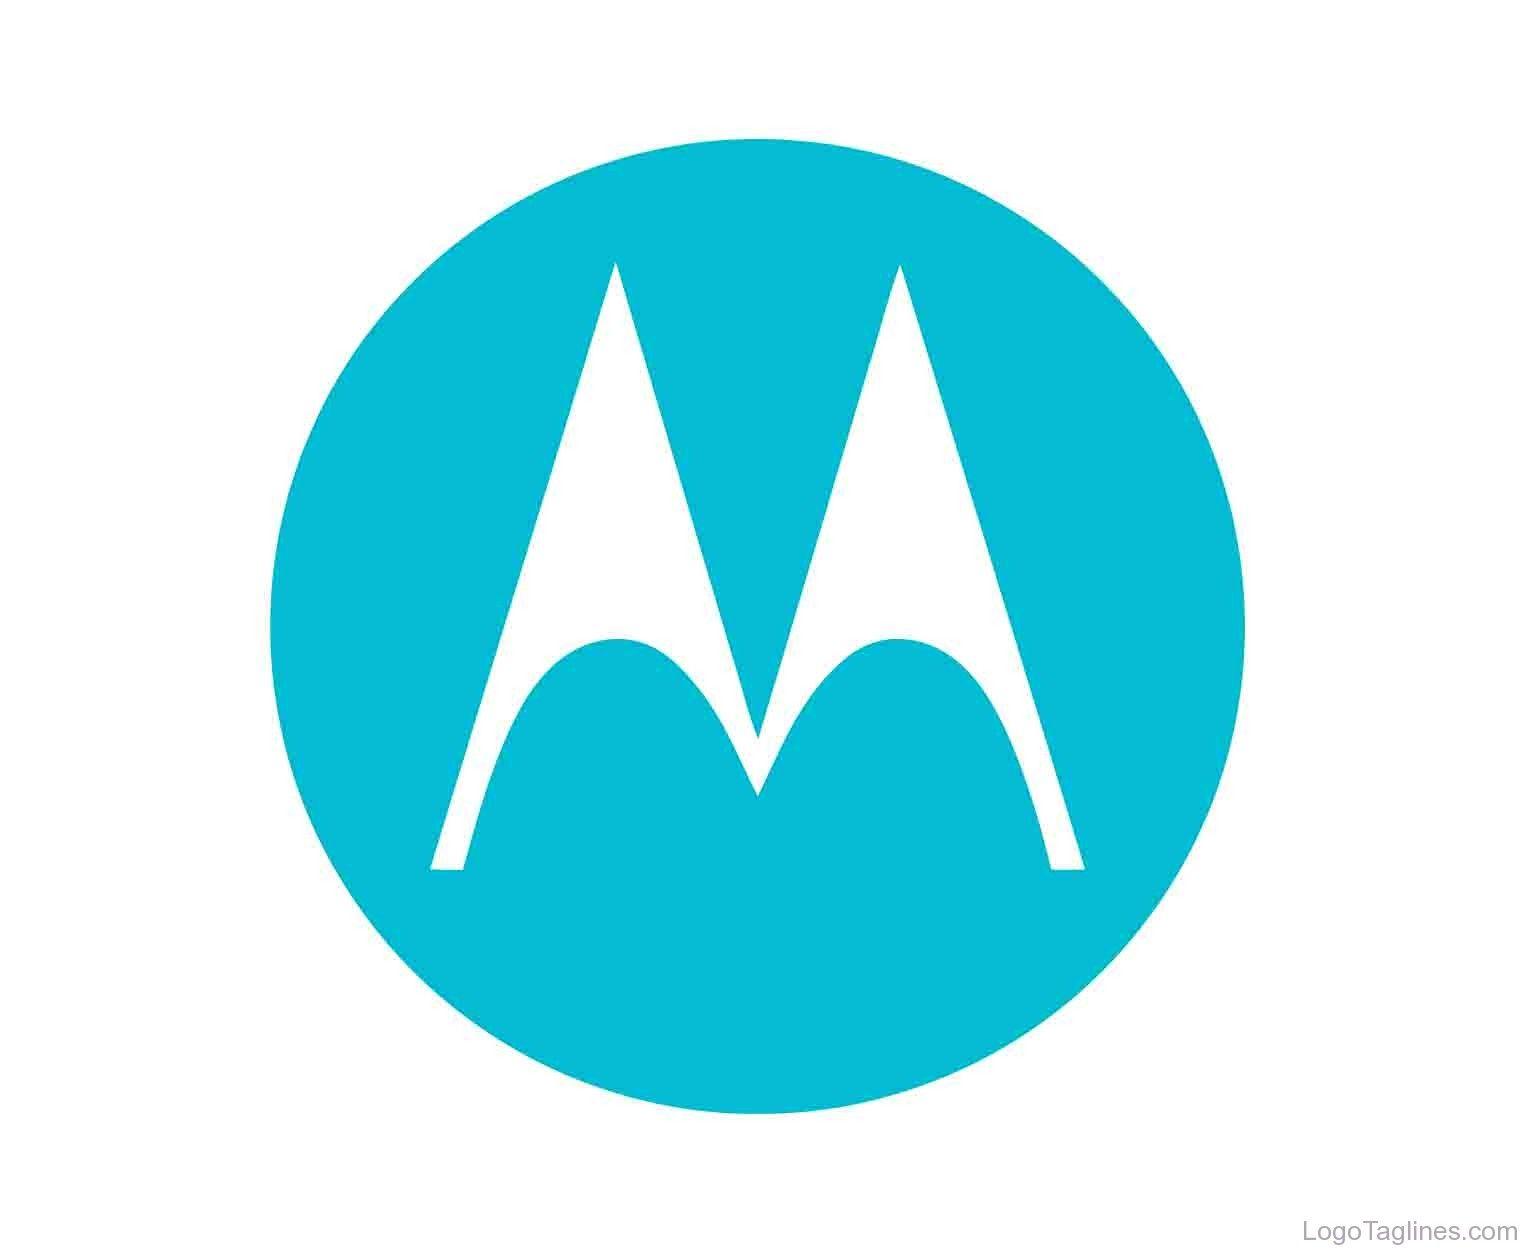 Google Motorola Logo - Motorola Logo and Tagline